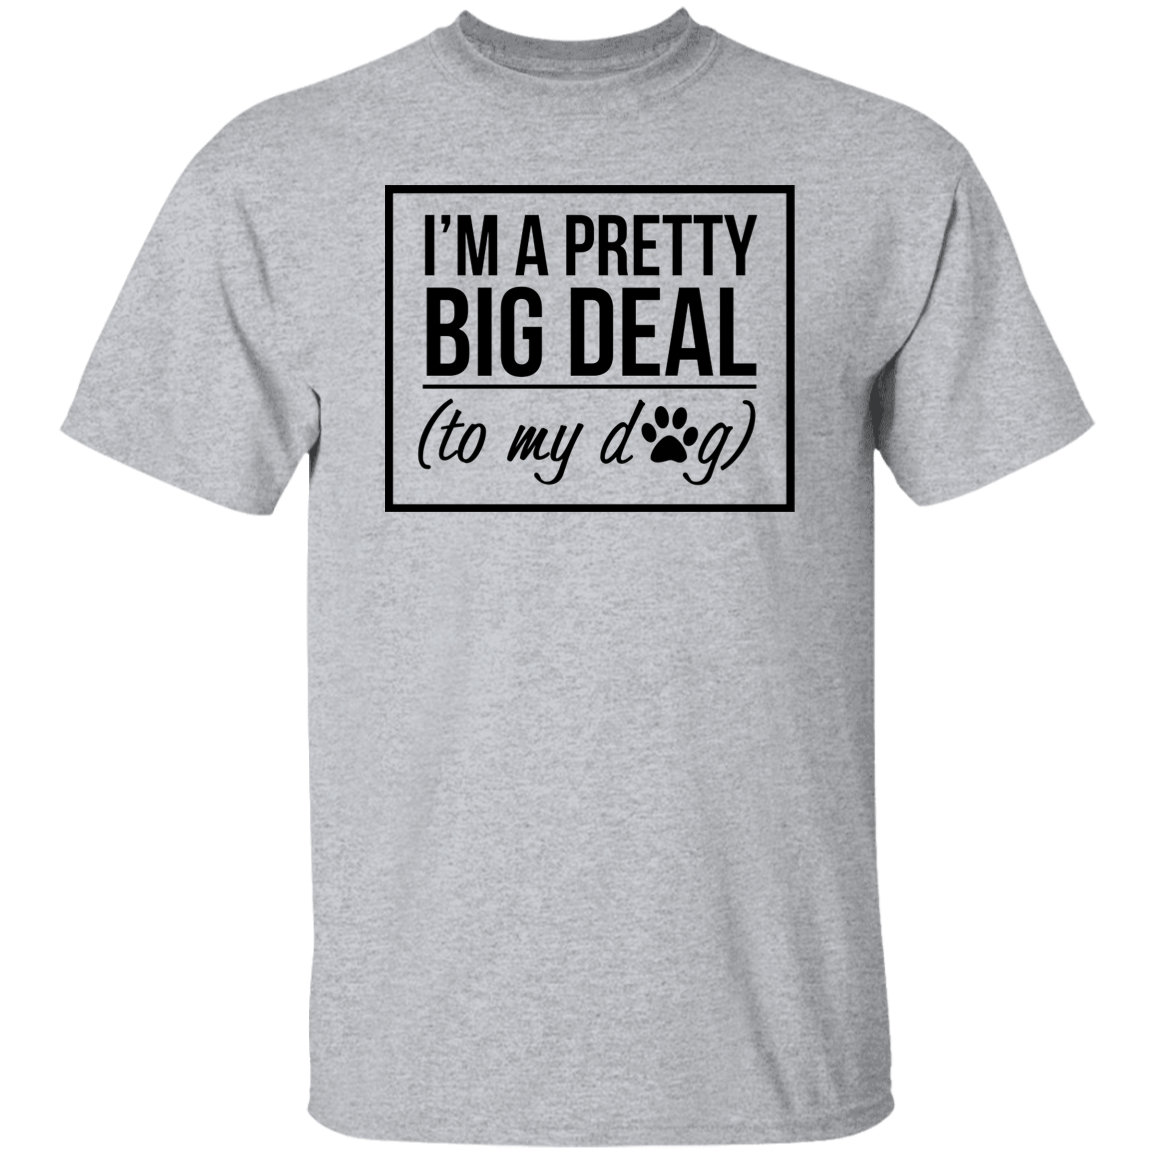 I'm A Pretty Big Deal (to my dog) 5.3 oz. T-Shirt